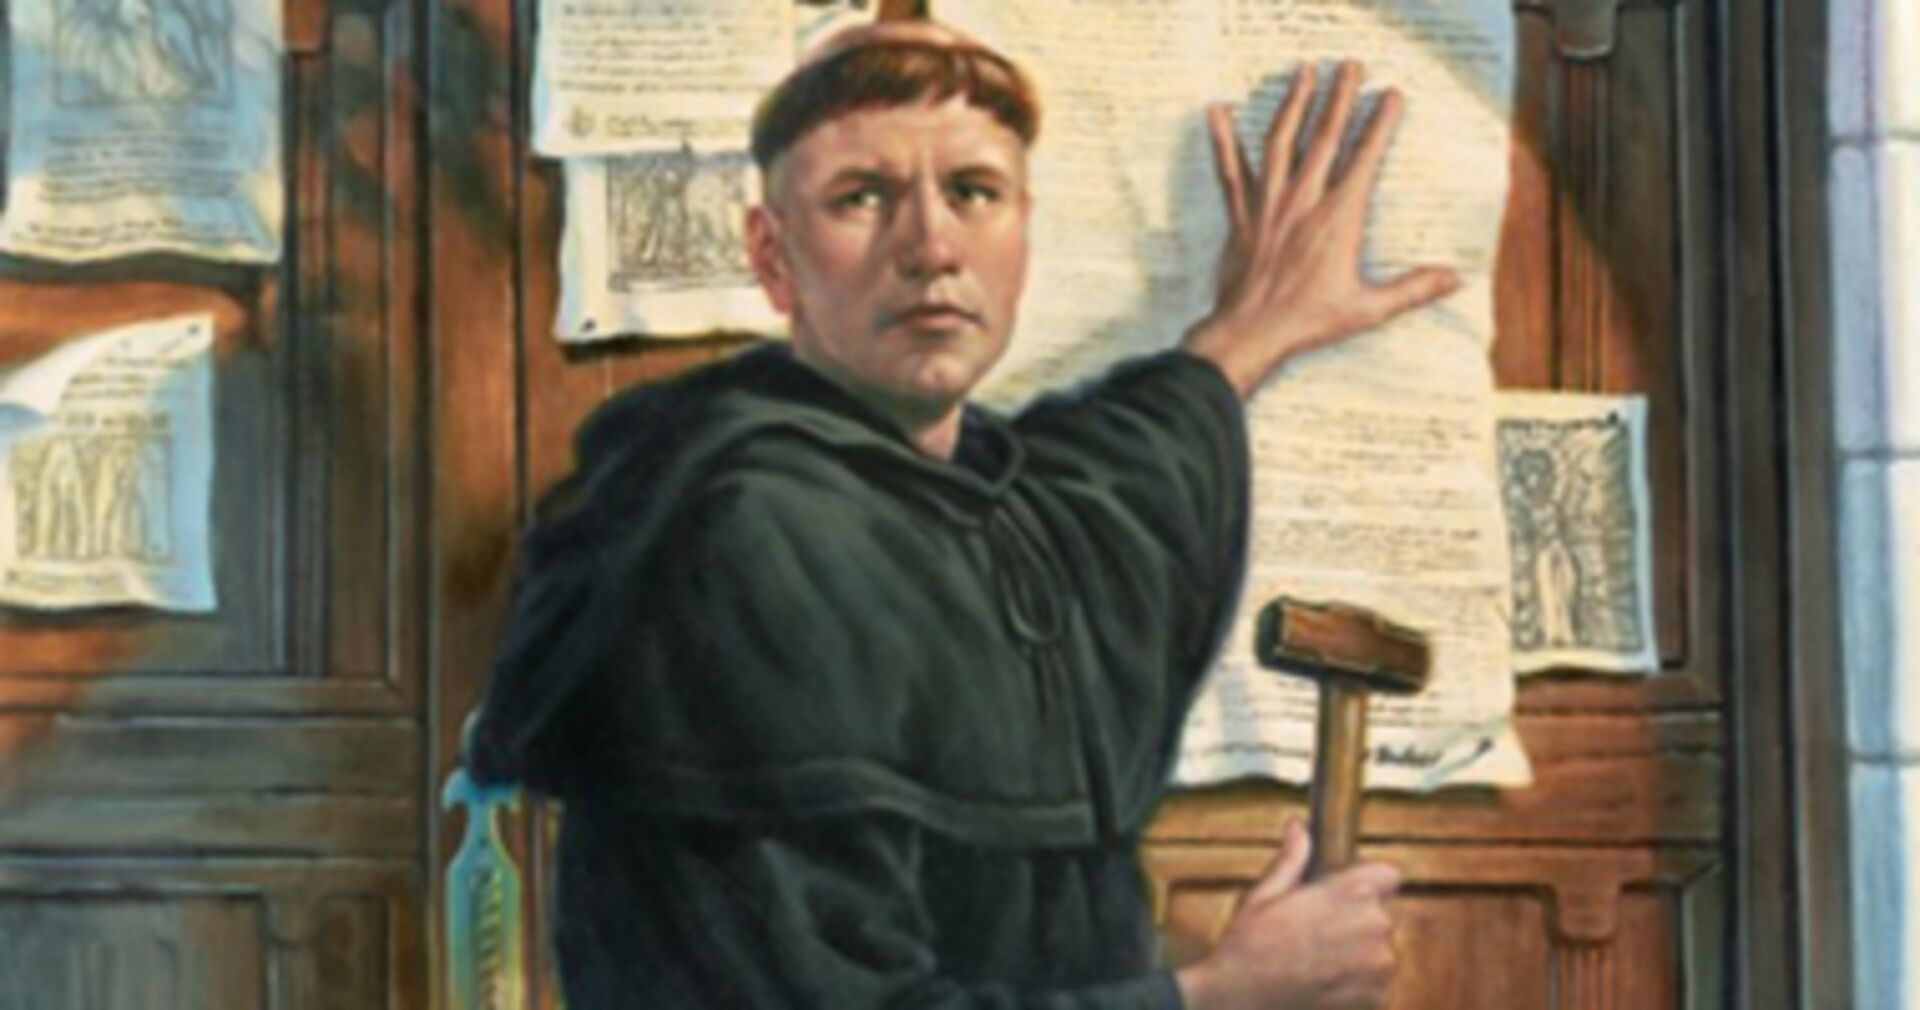 Luther pose les 95 thèses